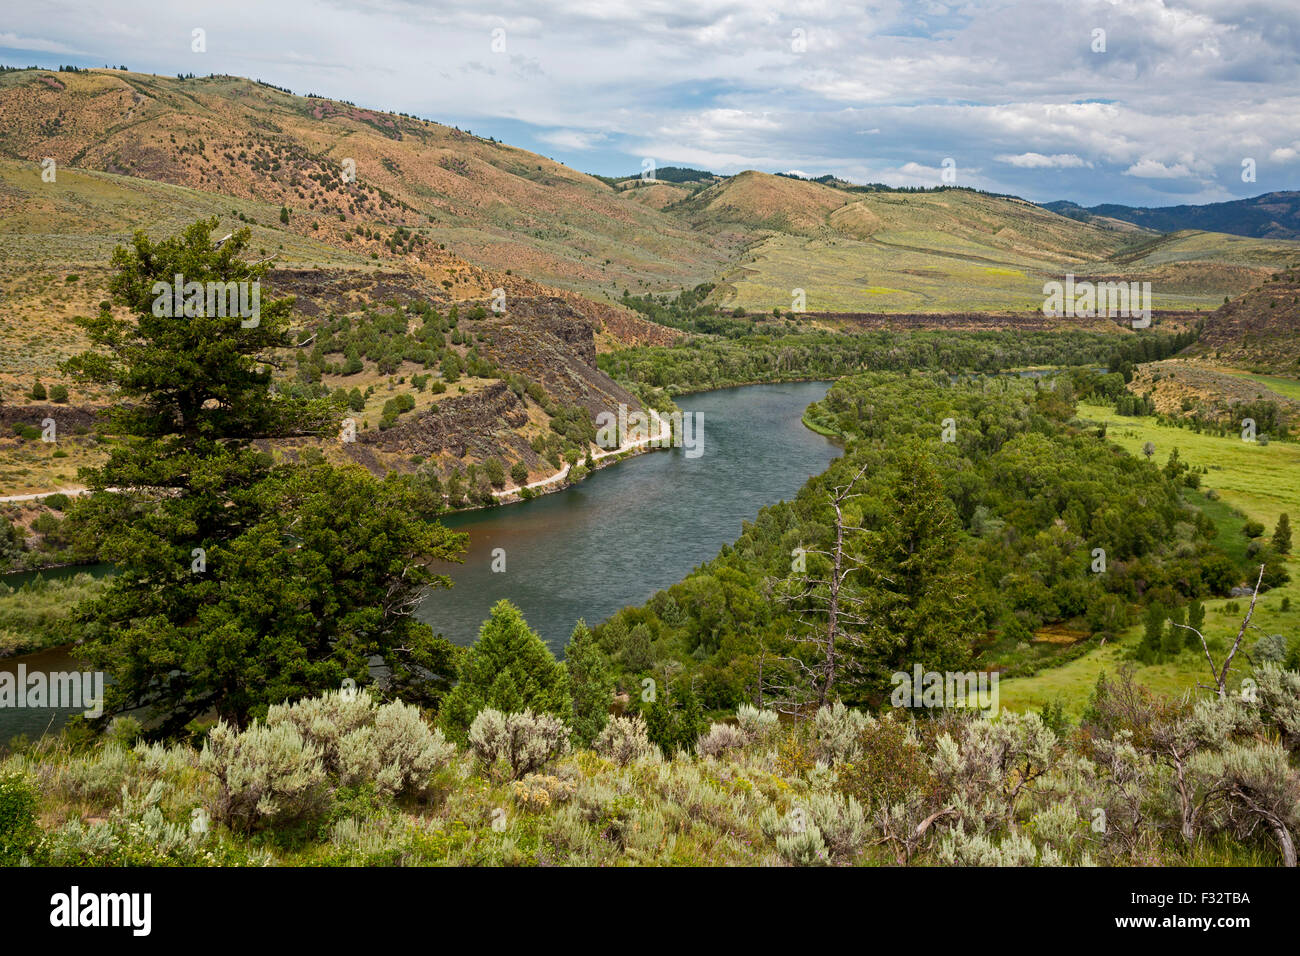 Heise, Idaho - The Snake River in southeastern Idaho. Stock Photo